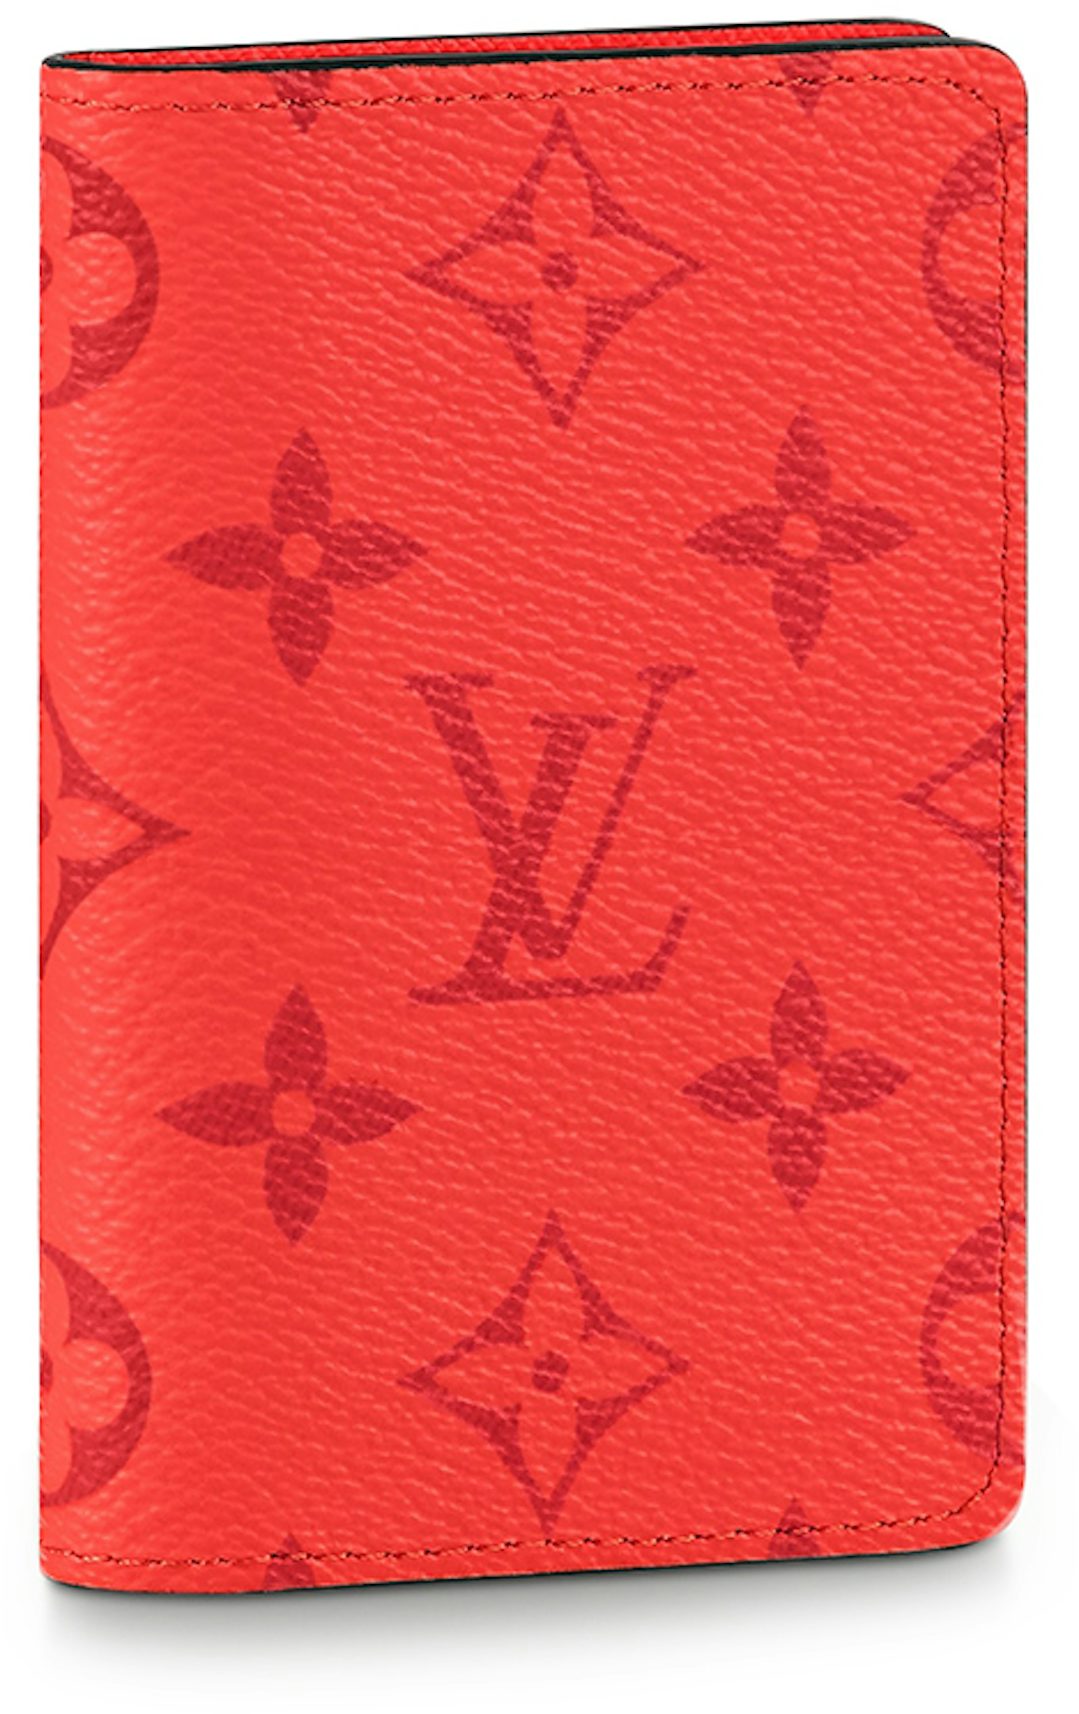 Louis Vuitton Multicolor Light iPhone 13 Case